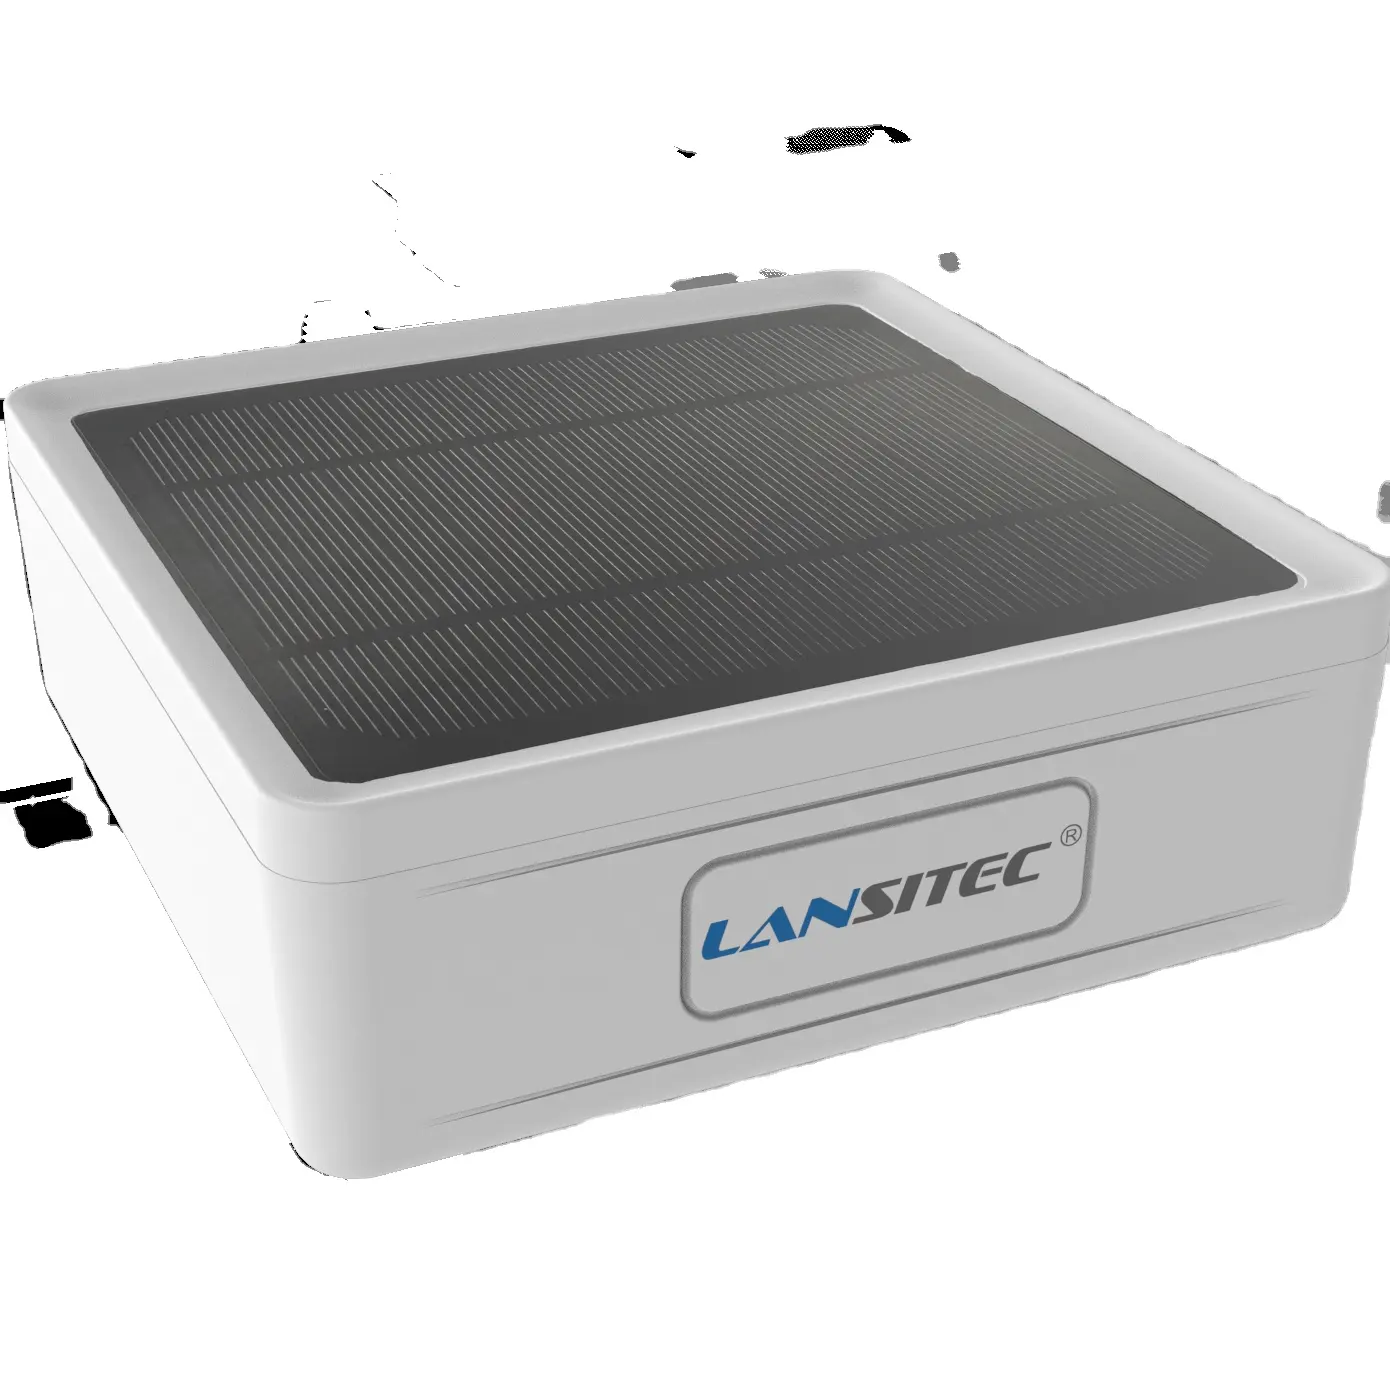 Lansitec Lora Bluetooth低コストソーラーパワークリーンエネルギー長いバッテリー寿命Loraソーラーゲートウェイ